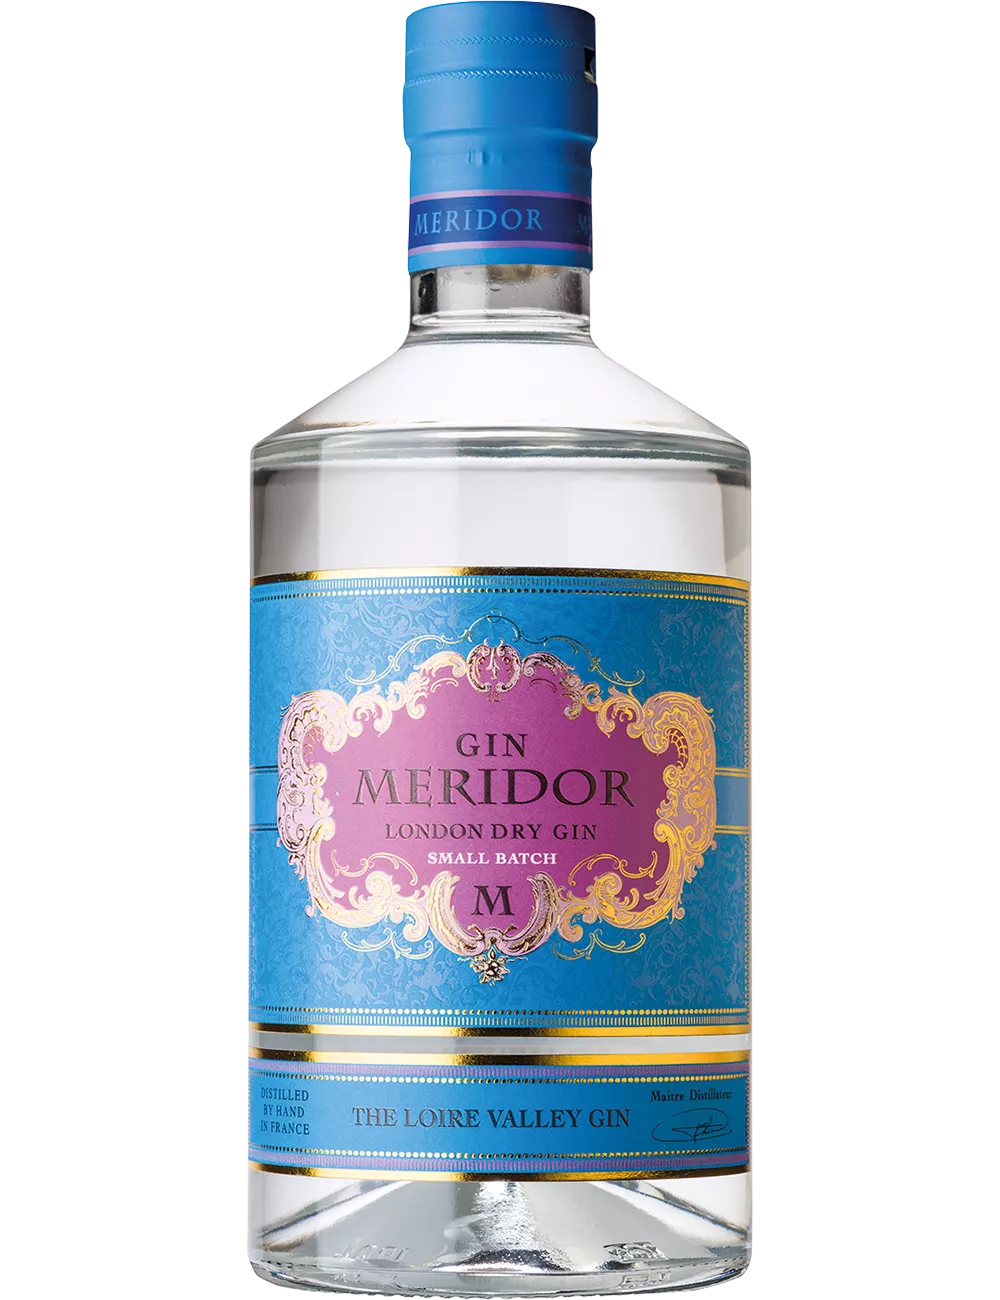 Meridor - London dry gin